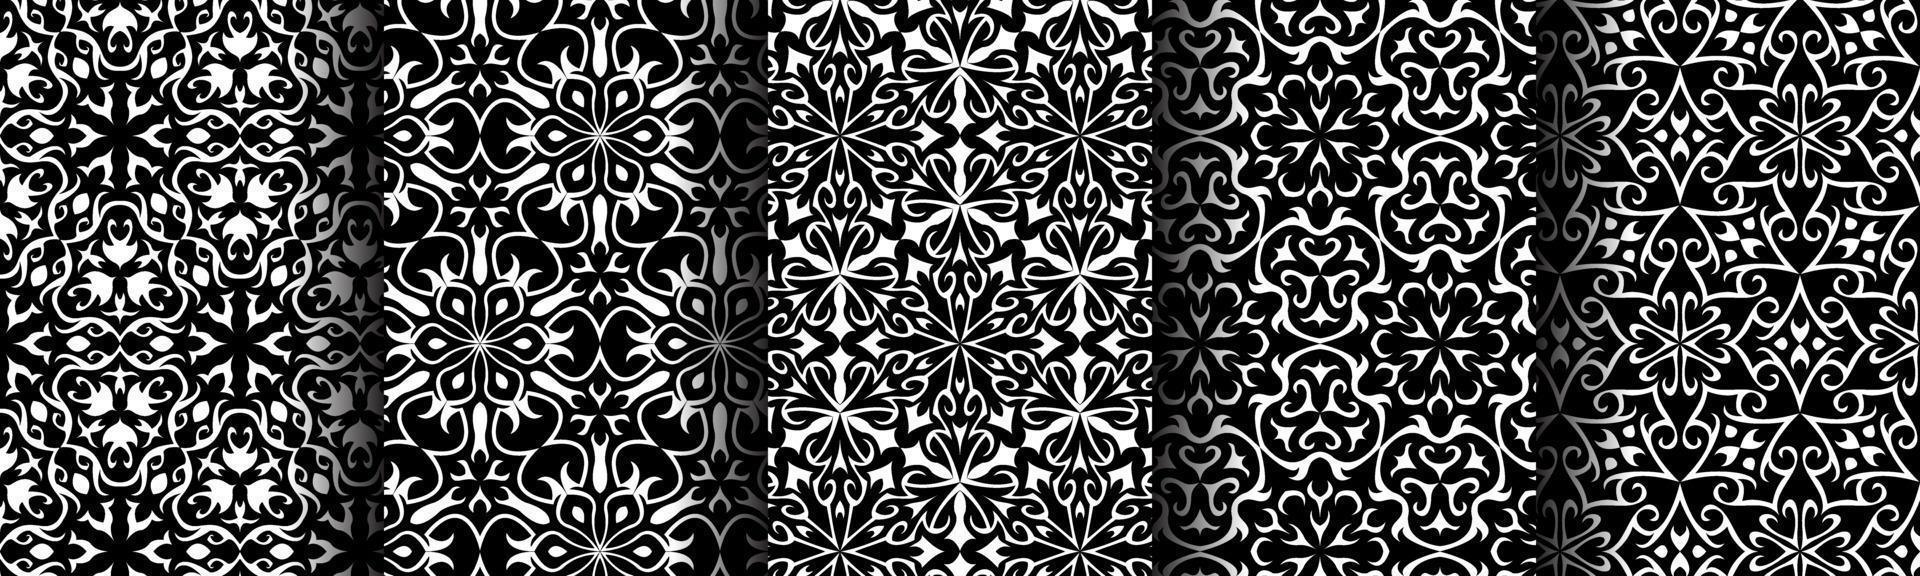 black and white pattern ethnic background set bundle vector